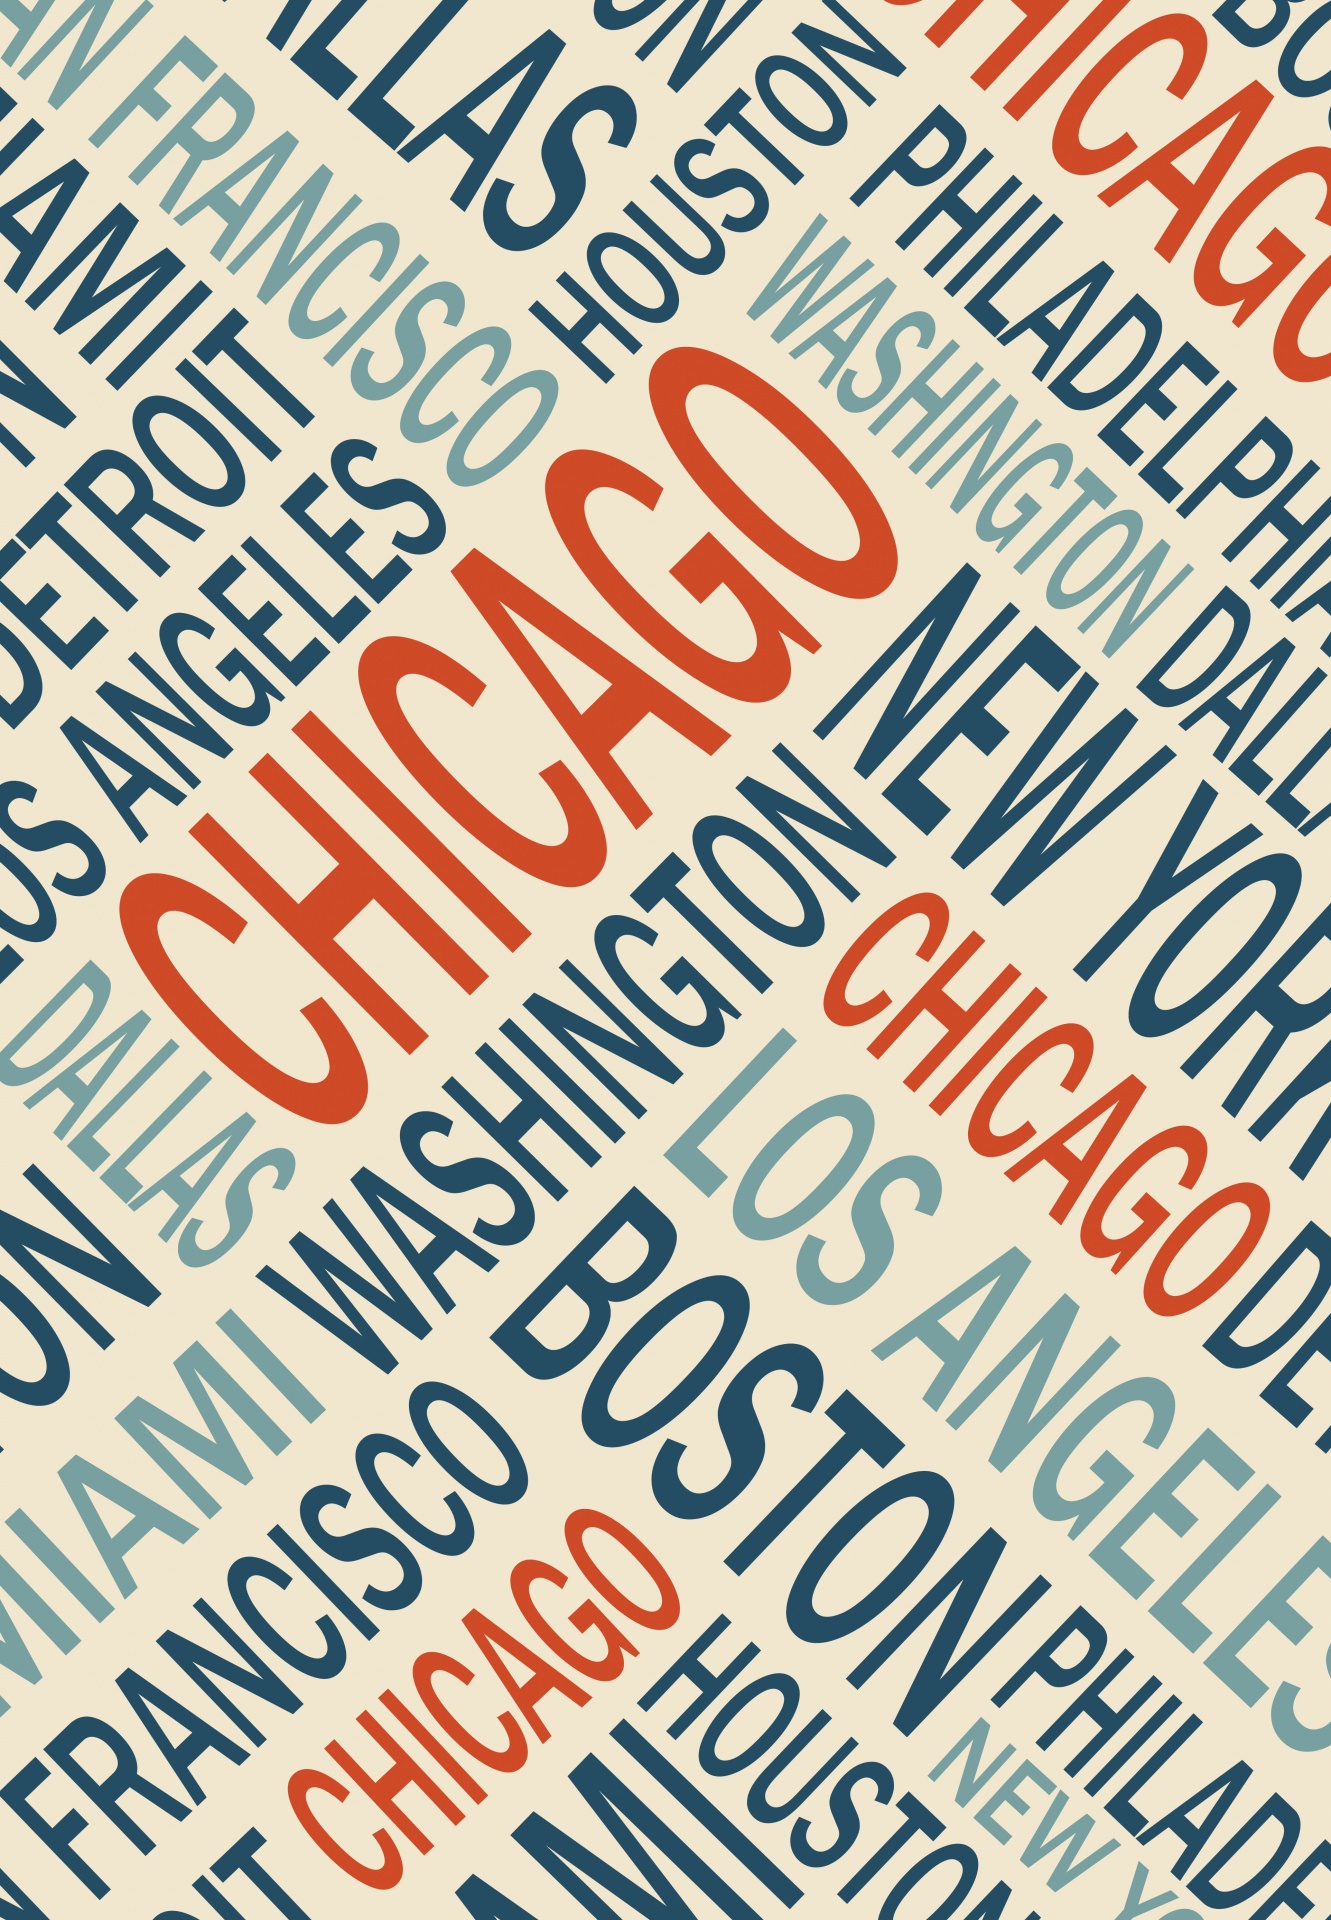 Chicago Word Cloud Vintage